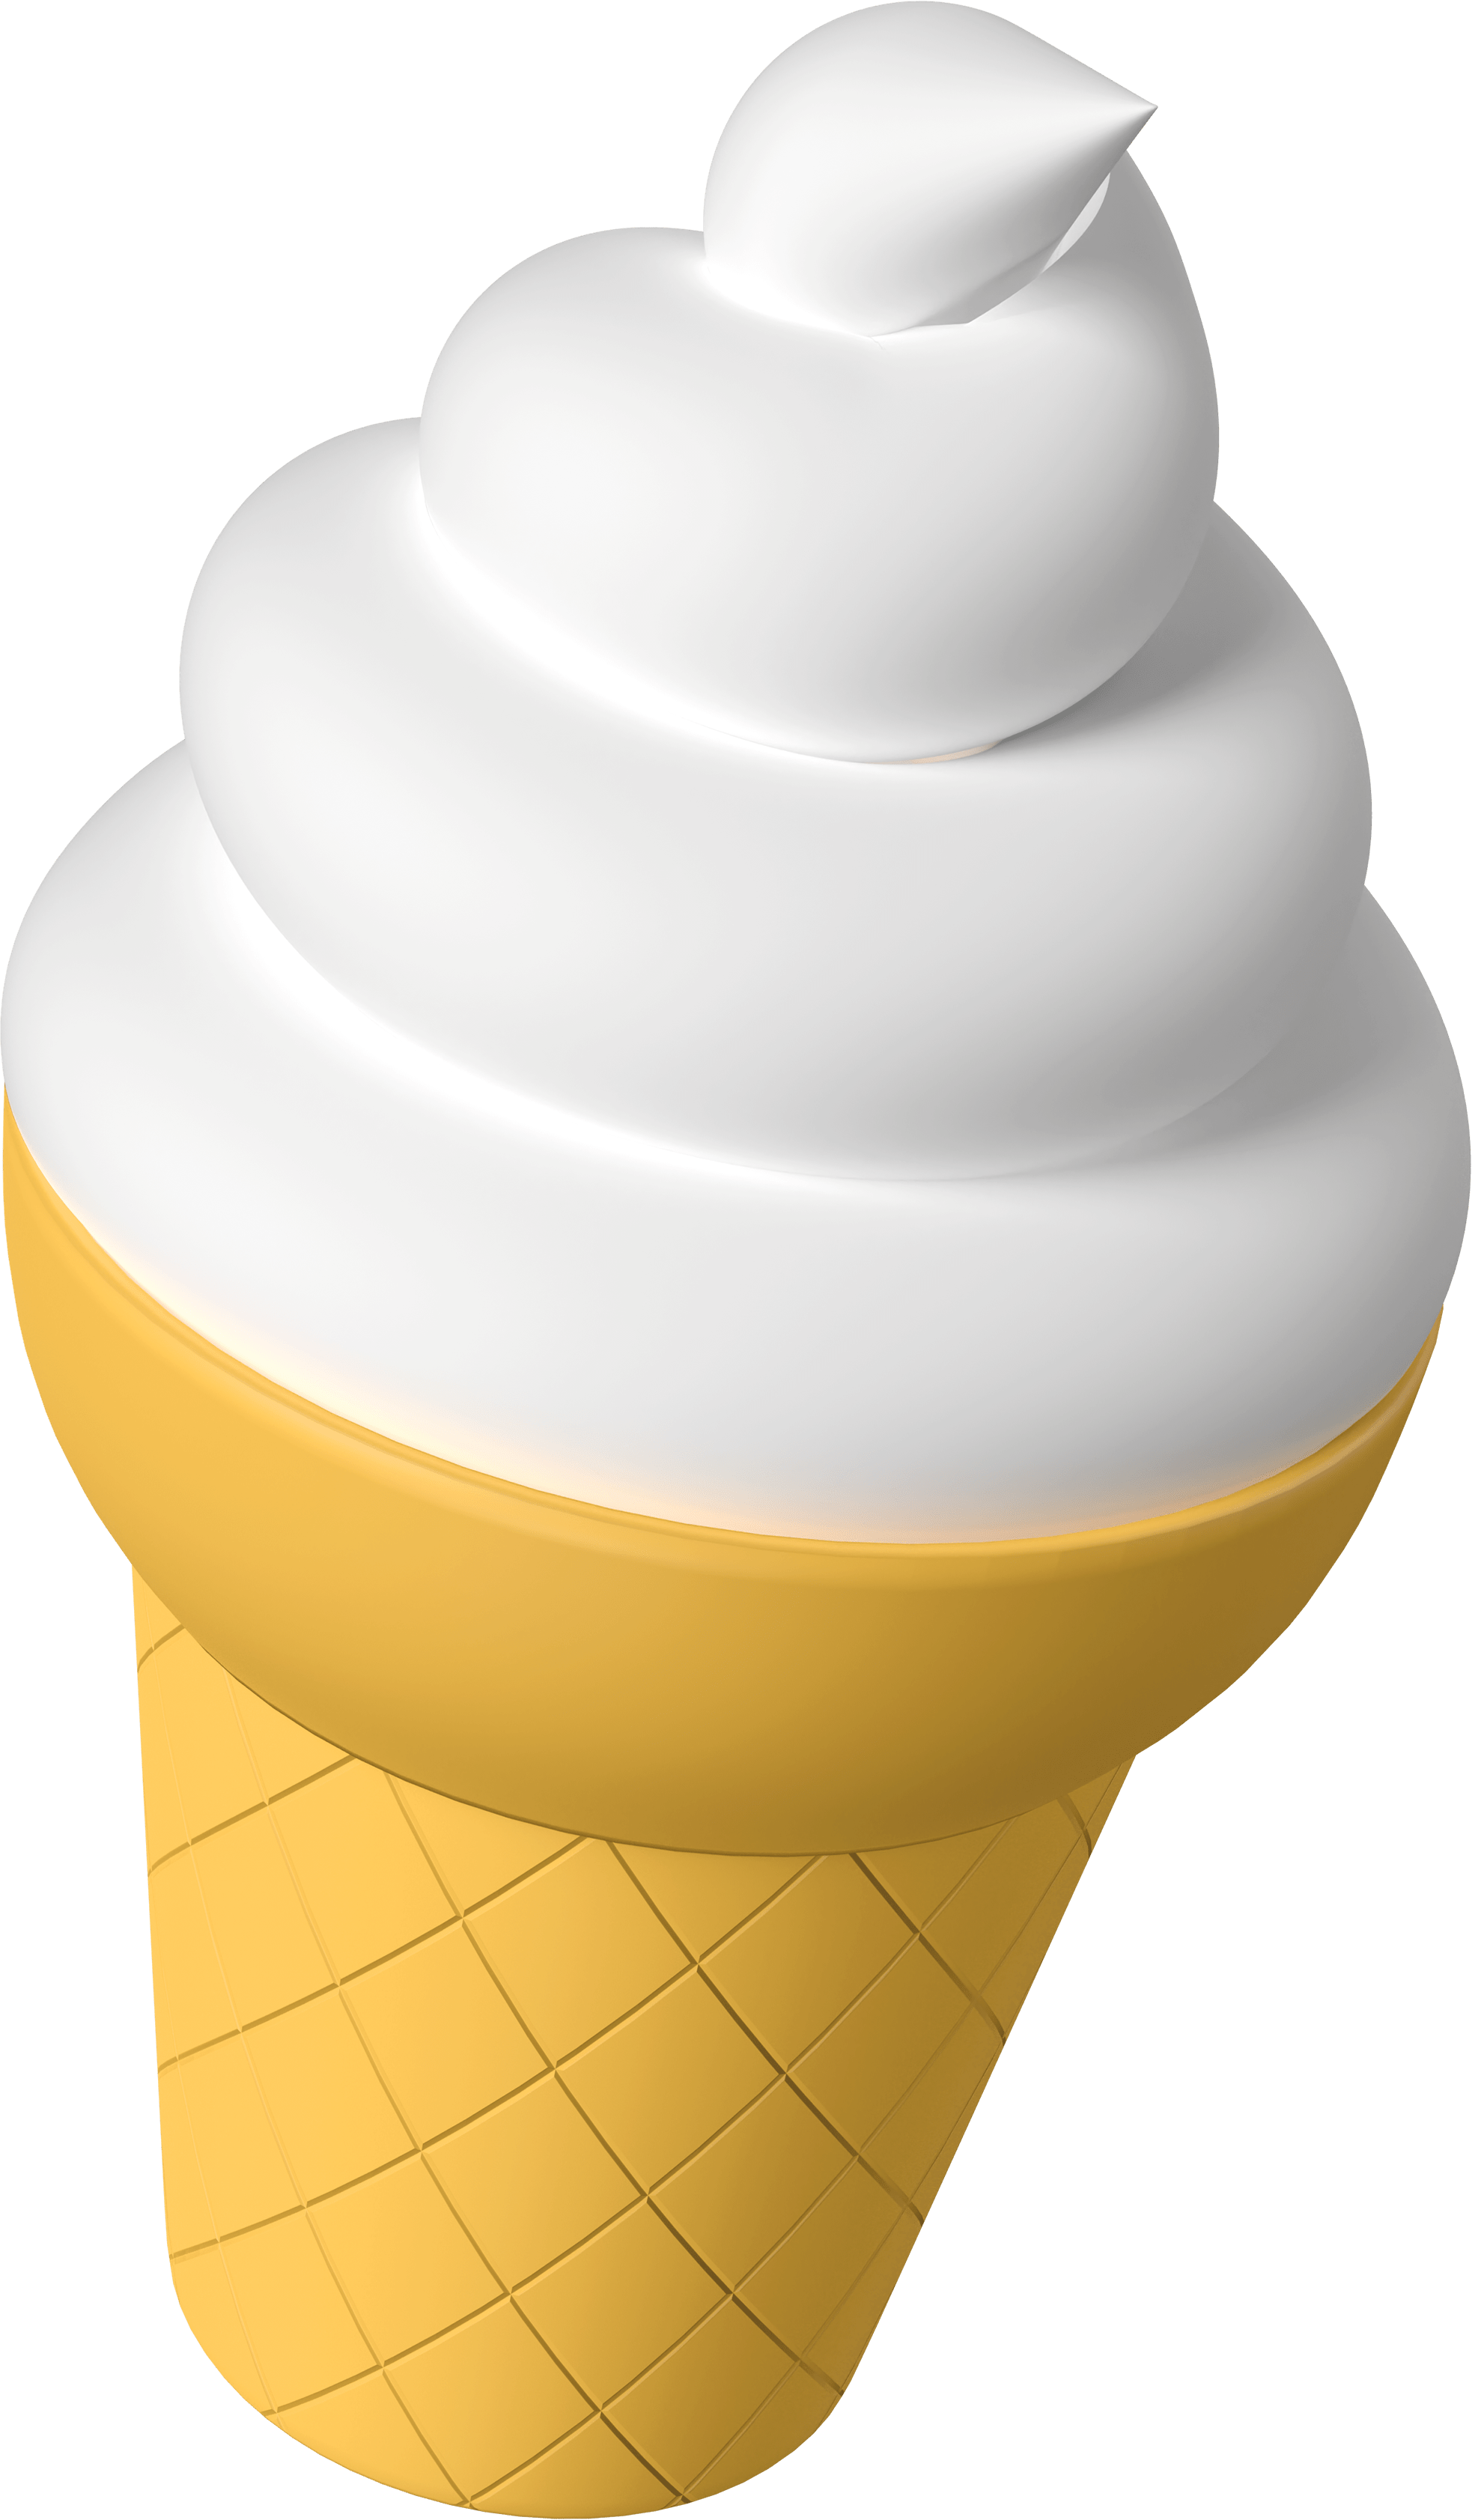 A 3D emoji of an soft serve vanilla ice cream cone